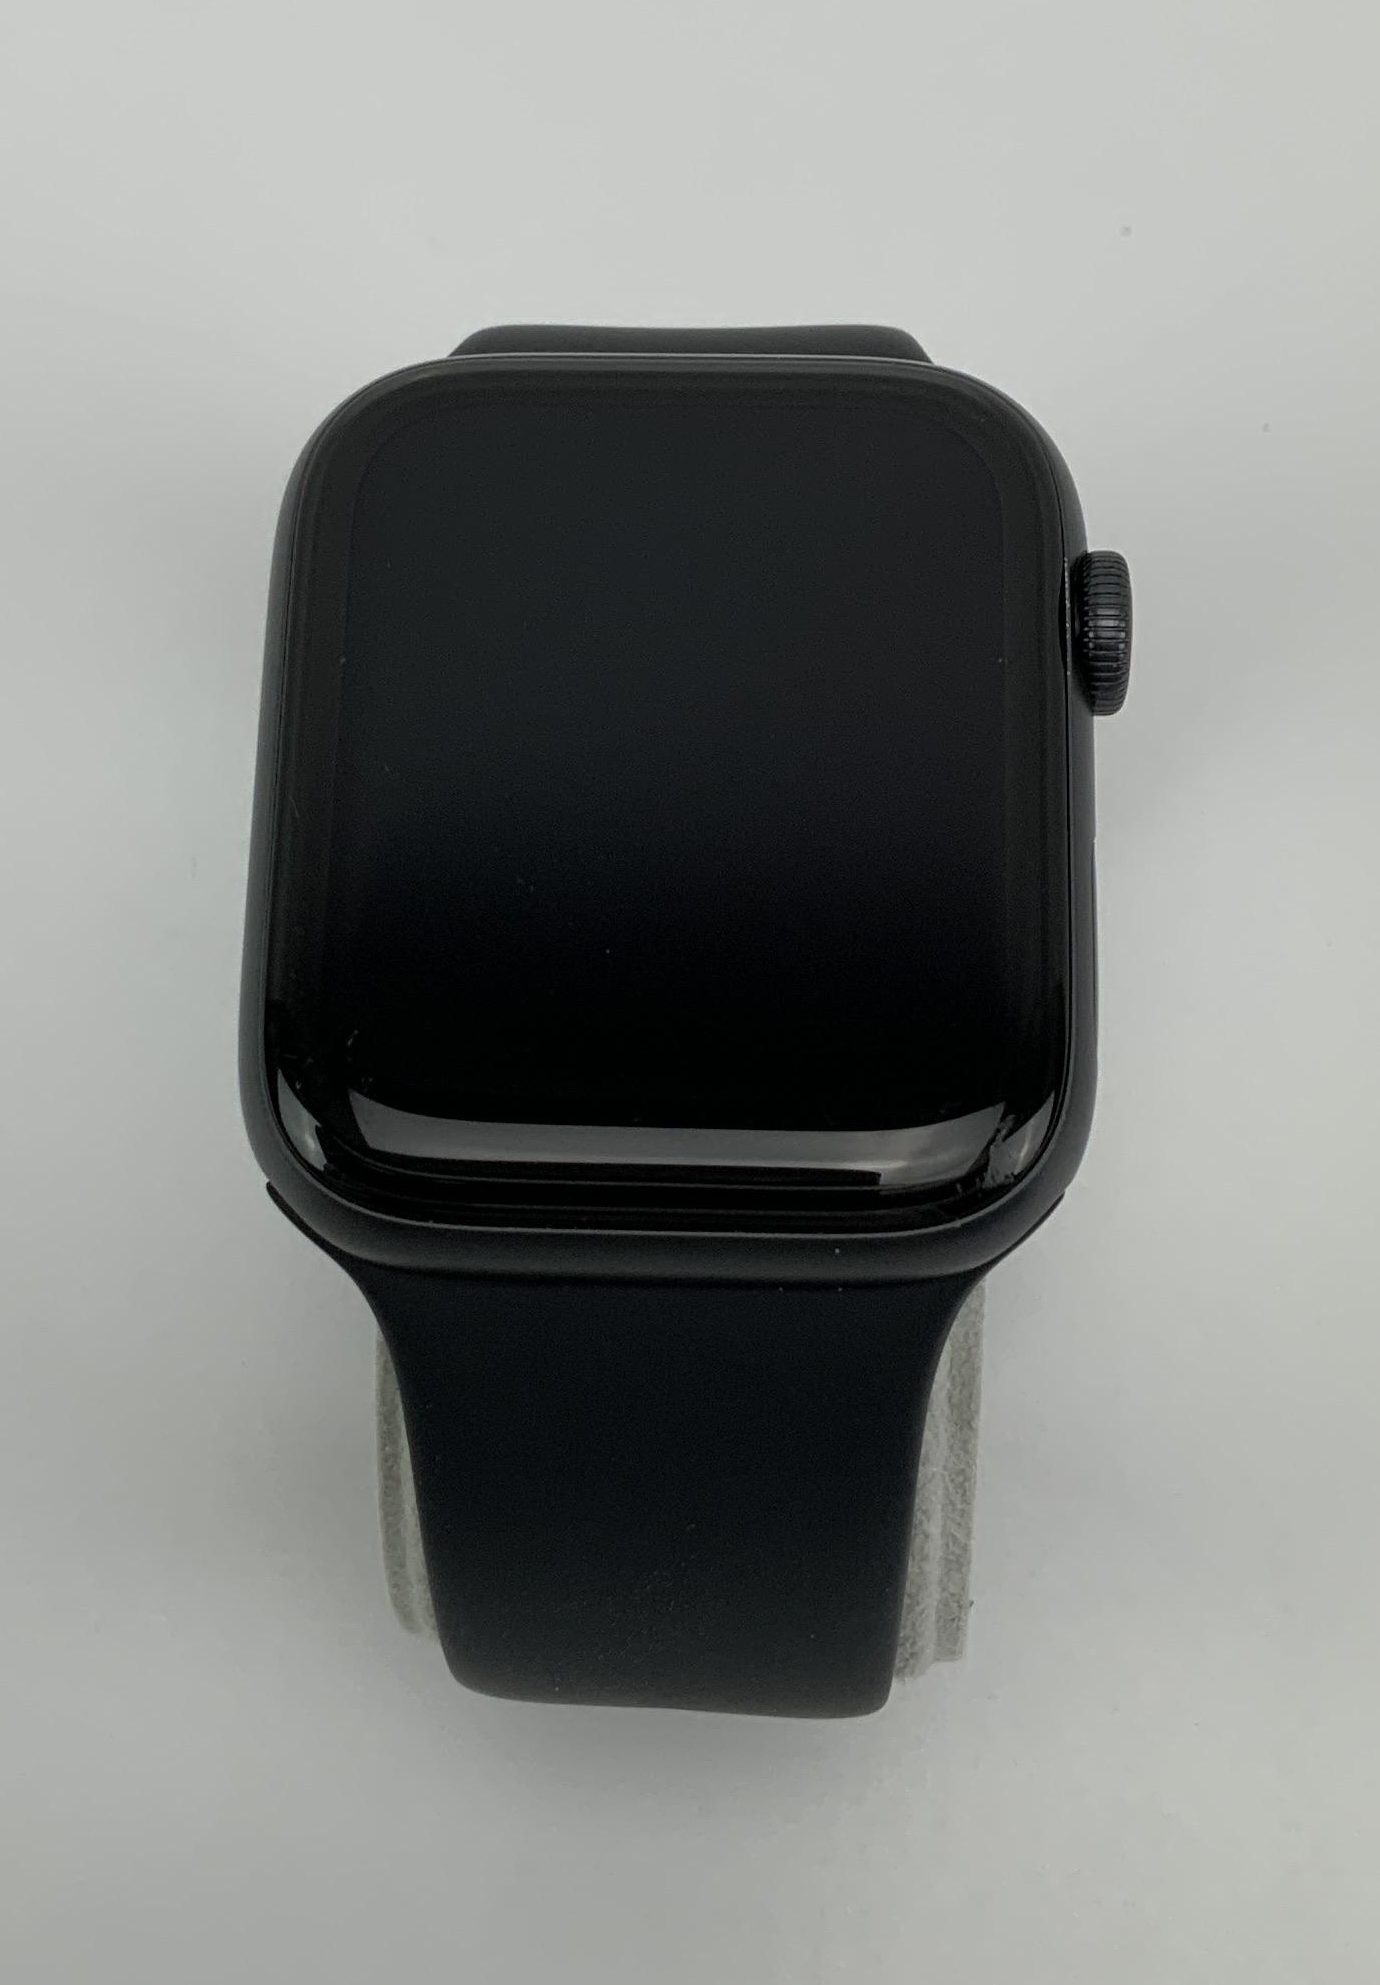 Watch Series 6 Steel Cellular (44mm), Space Black, imagen 1